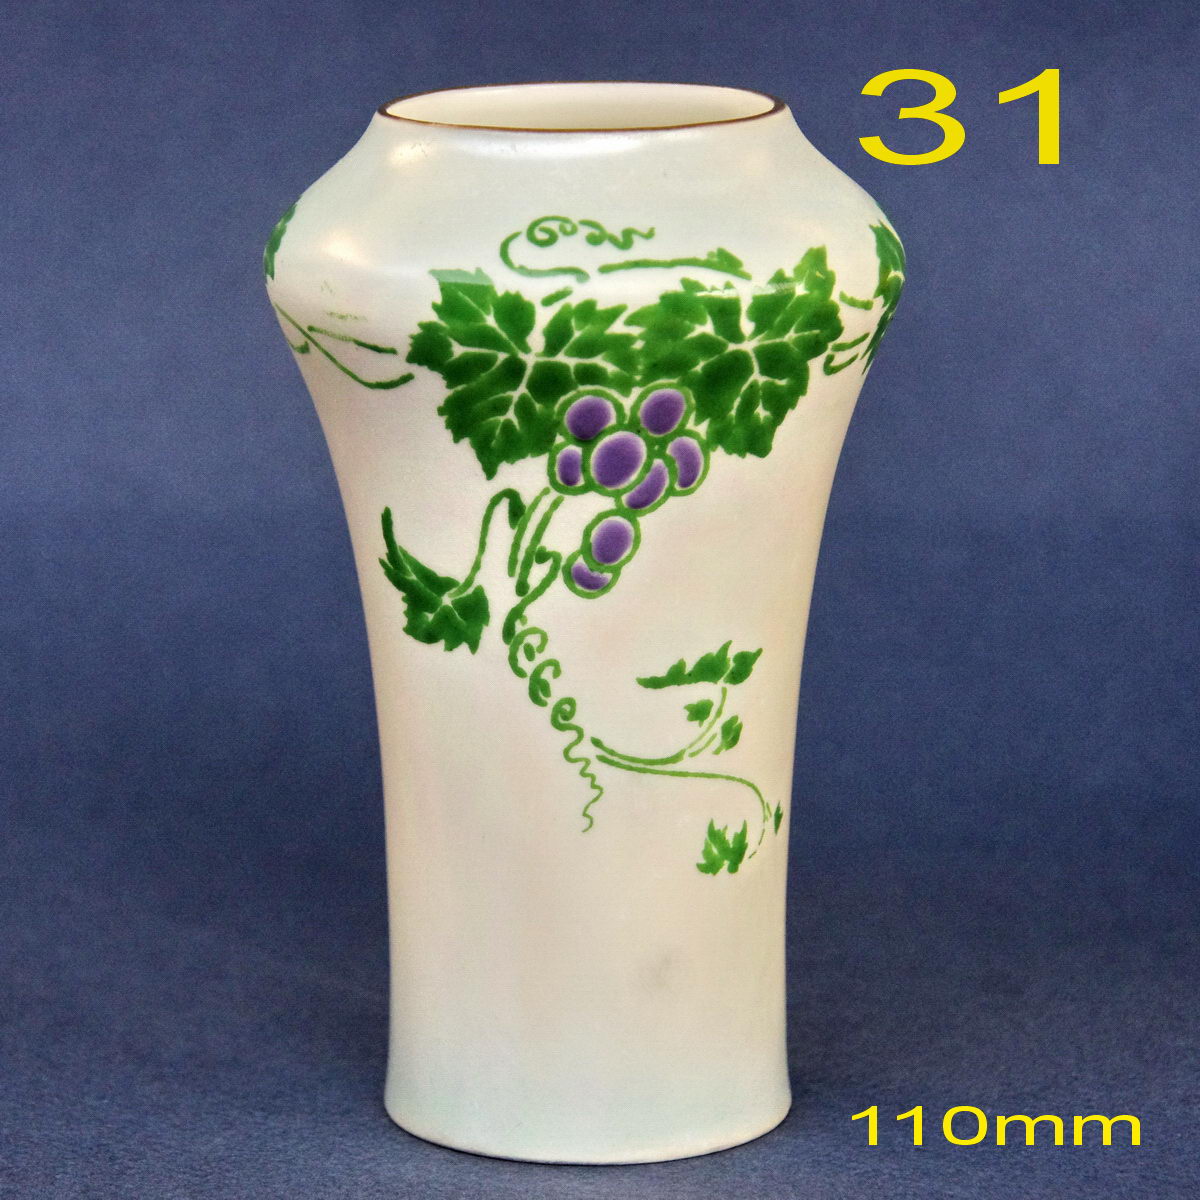 Shape 31 of Small China Vase Series